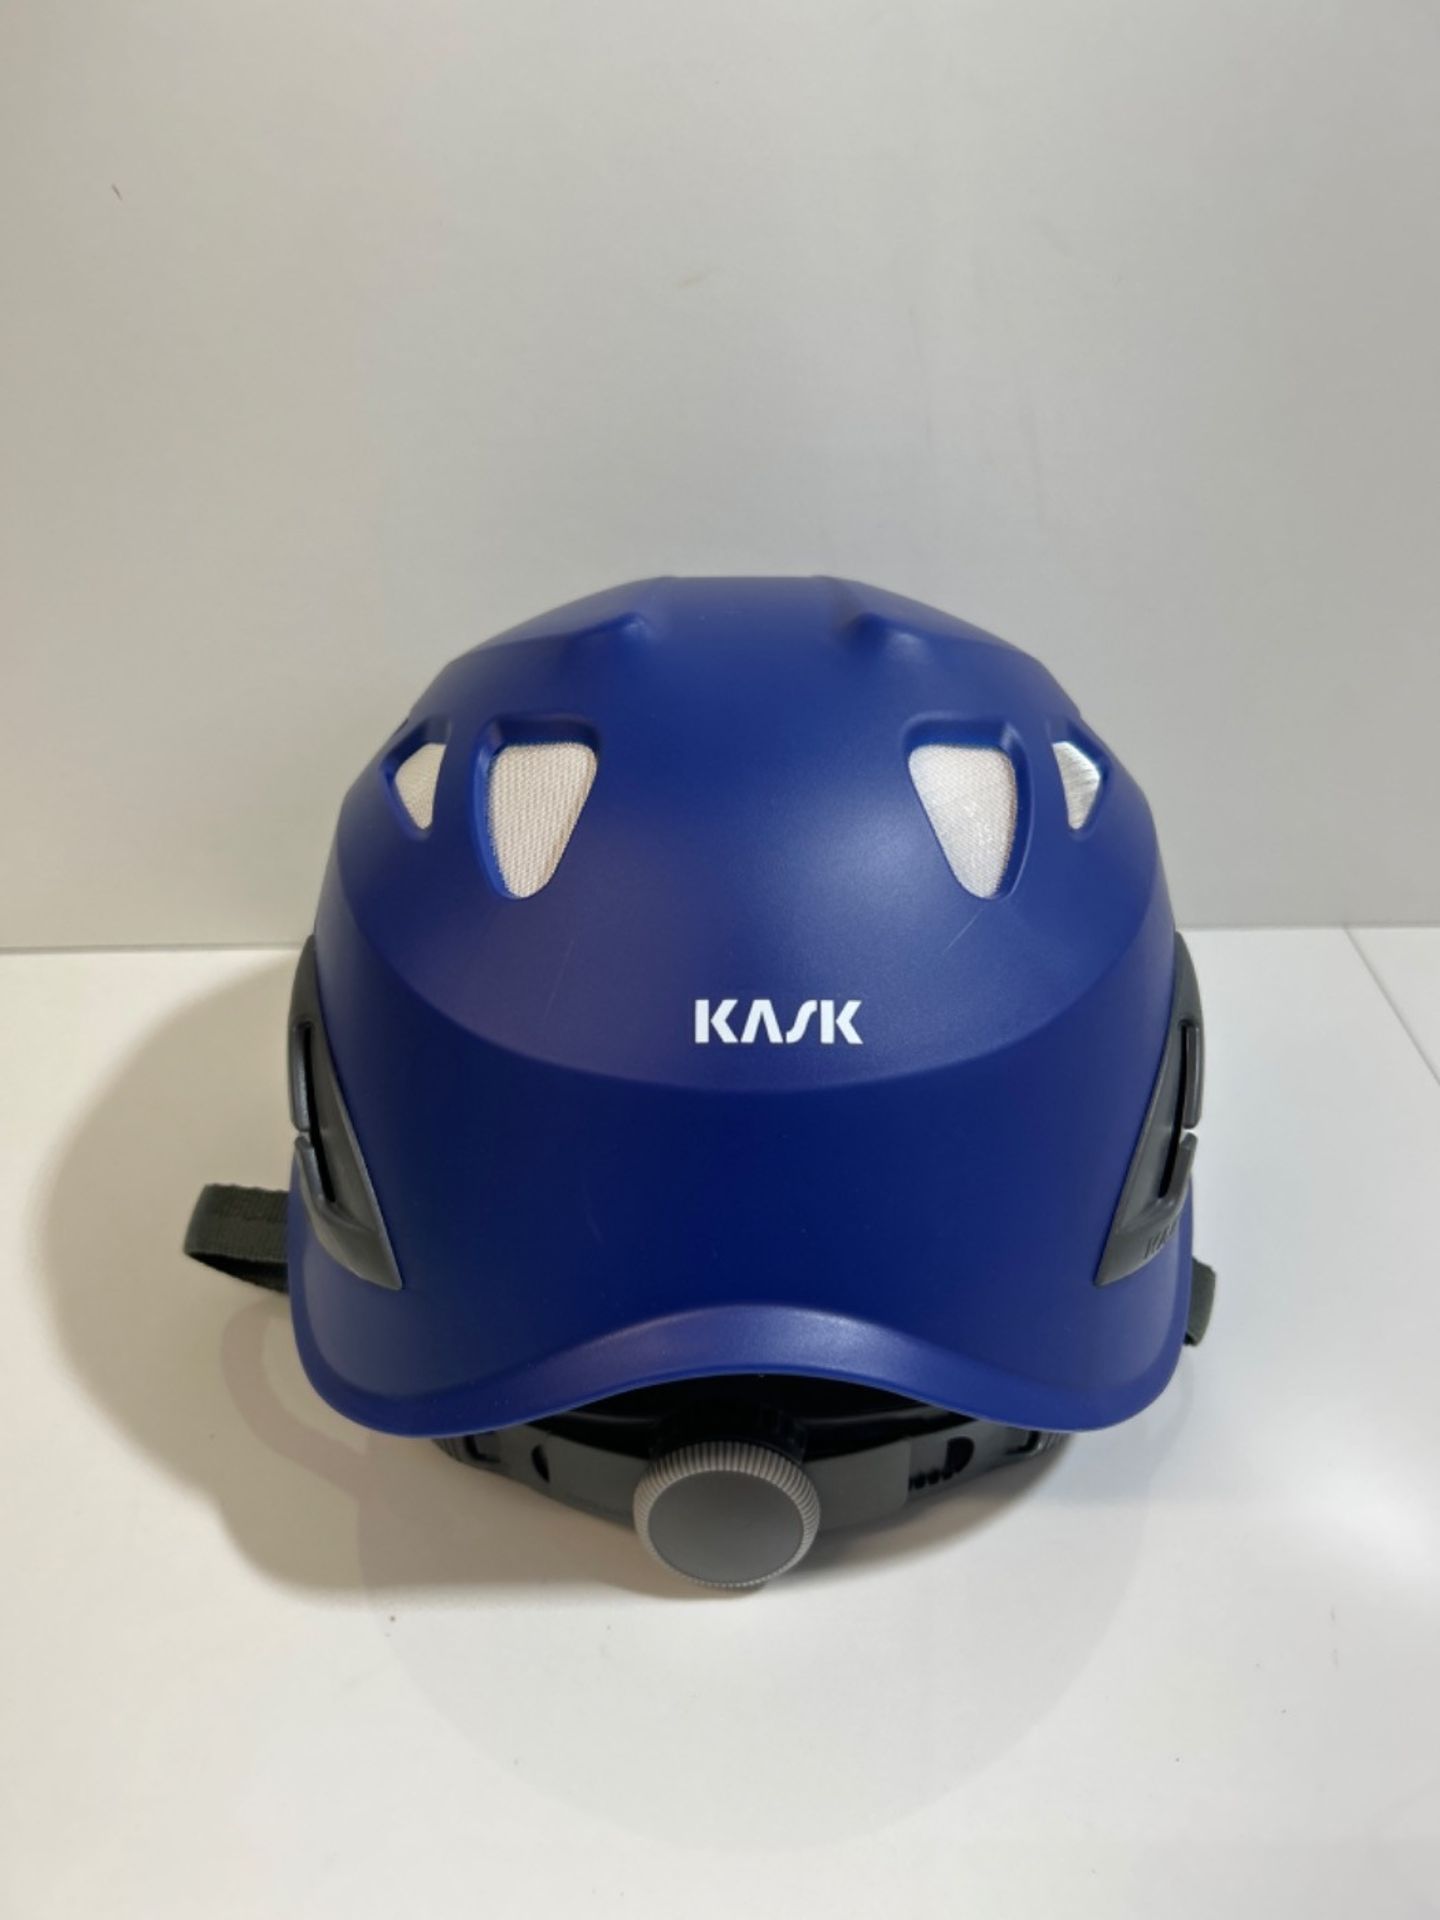 Kask WHE00008-208 Size 51-63 cm "Plasma AQ" Helmet - Dark Blue - Image 3 of 3